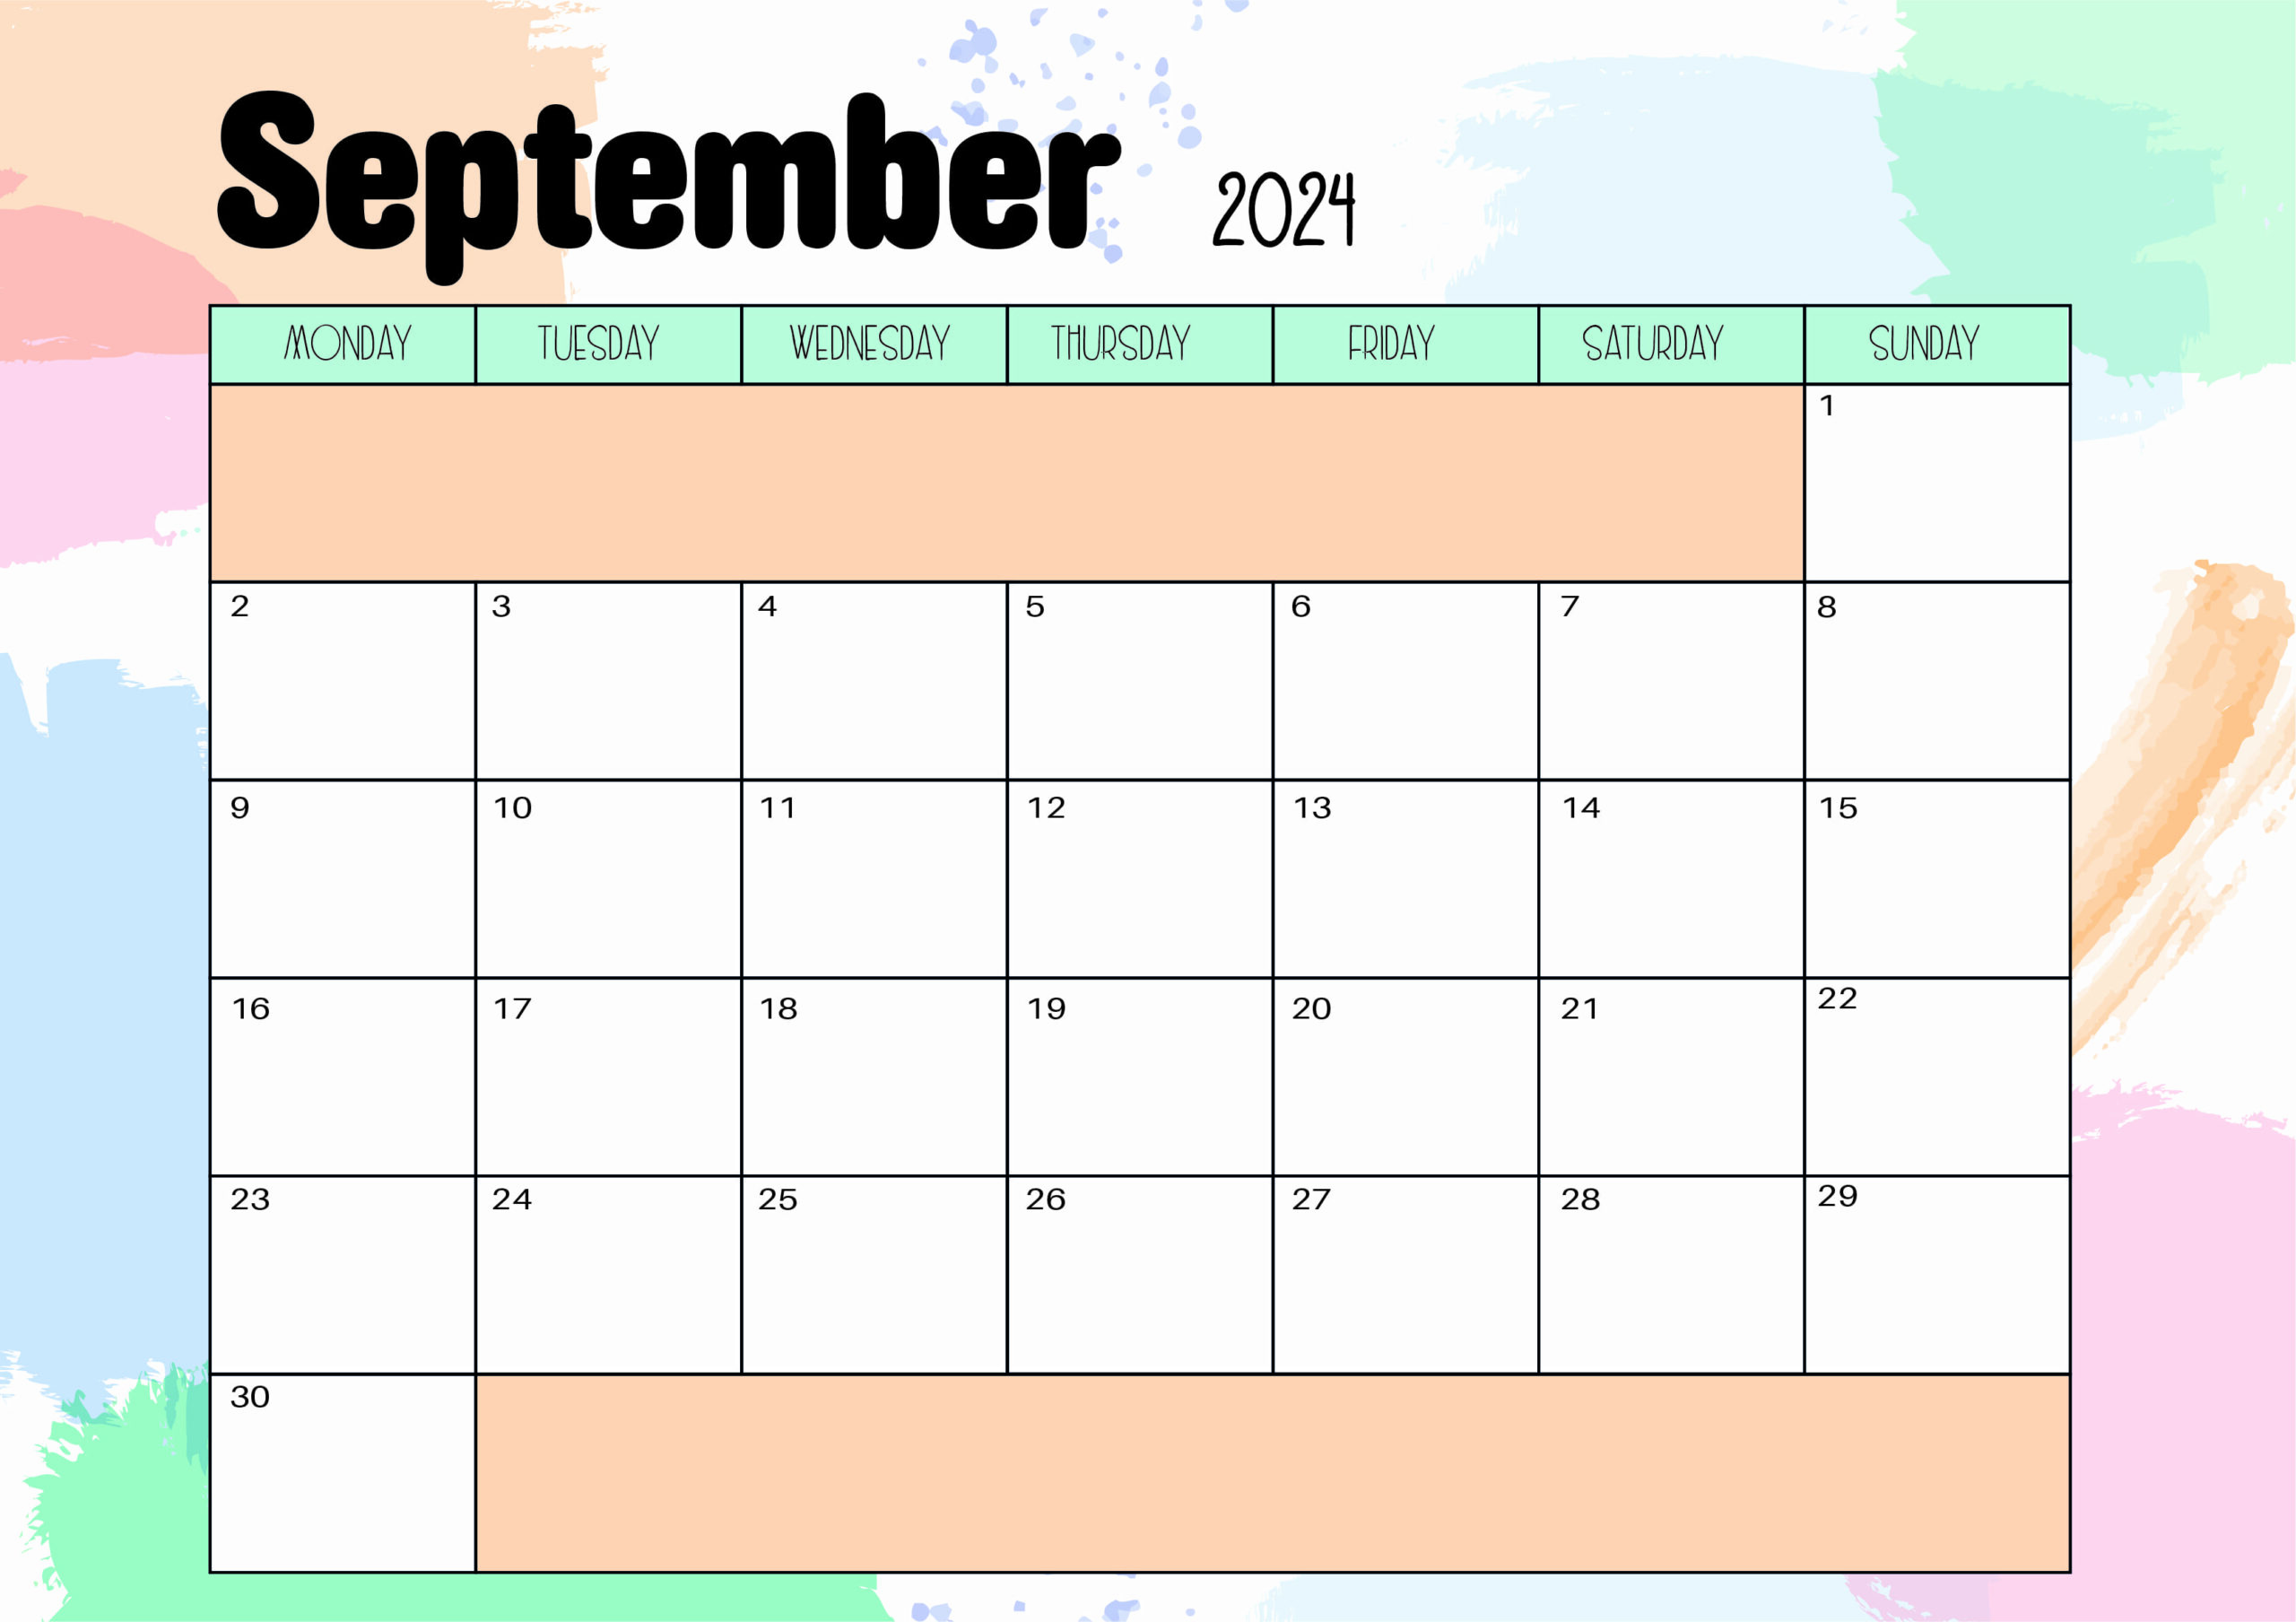 September 2024 Calendar for Printing in PDF